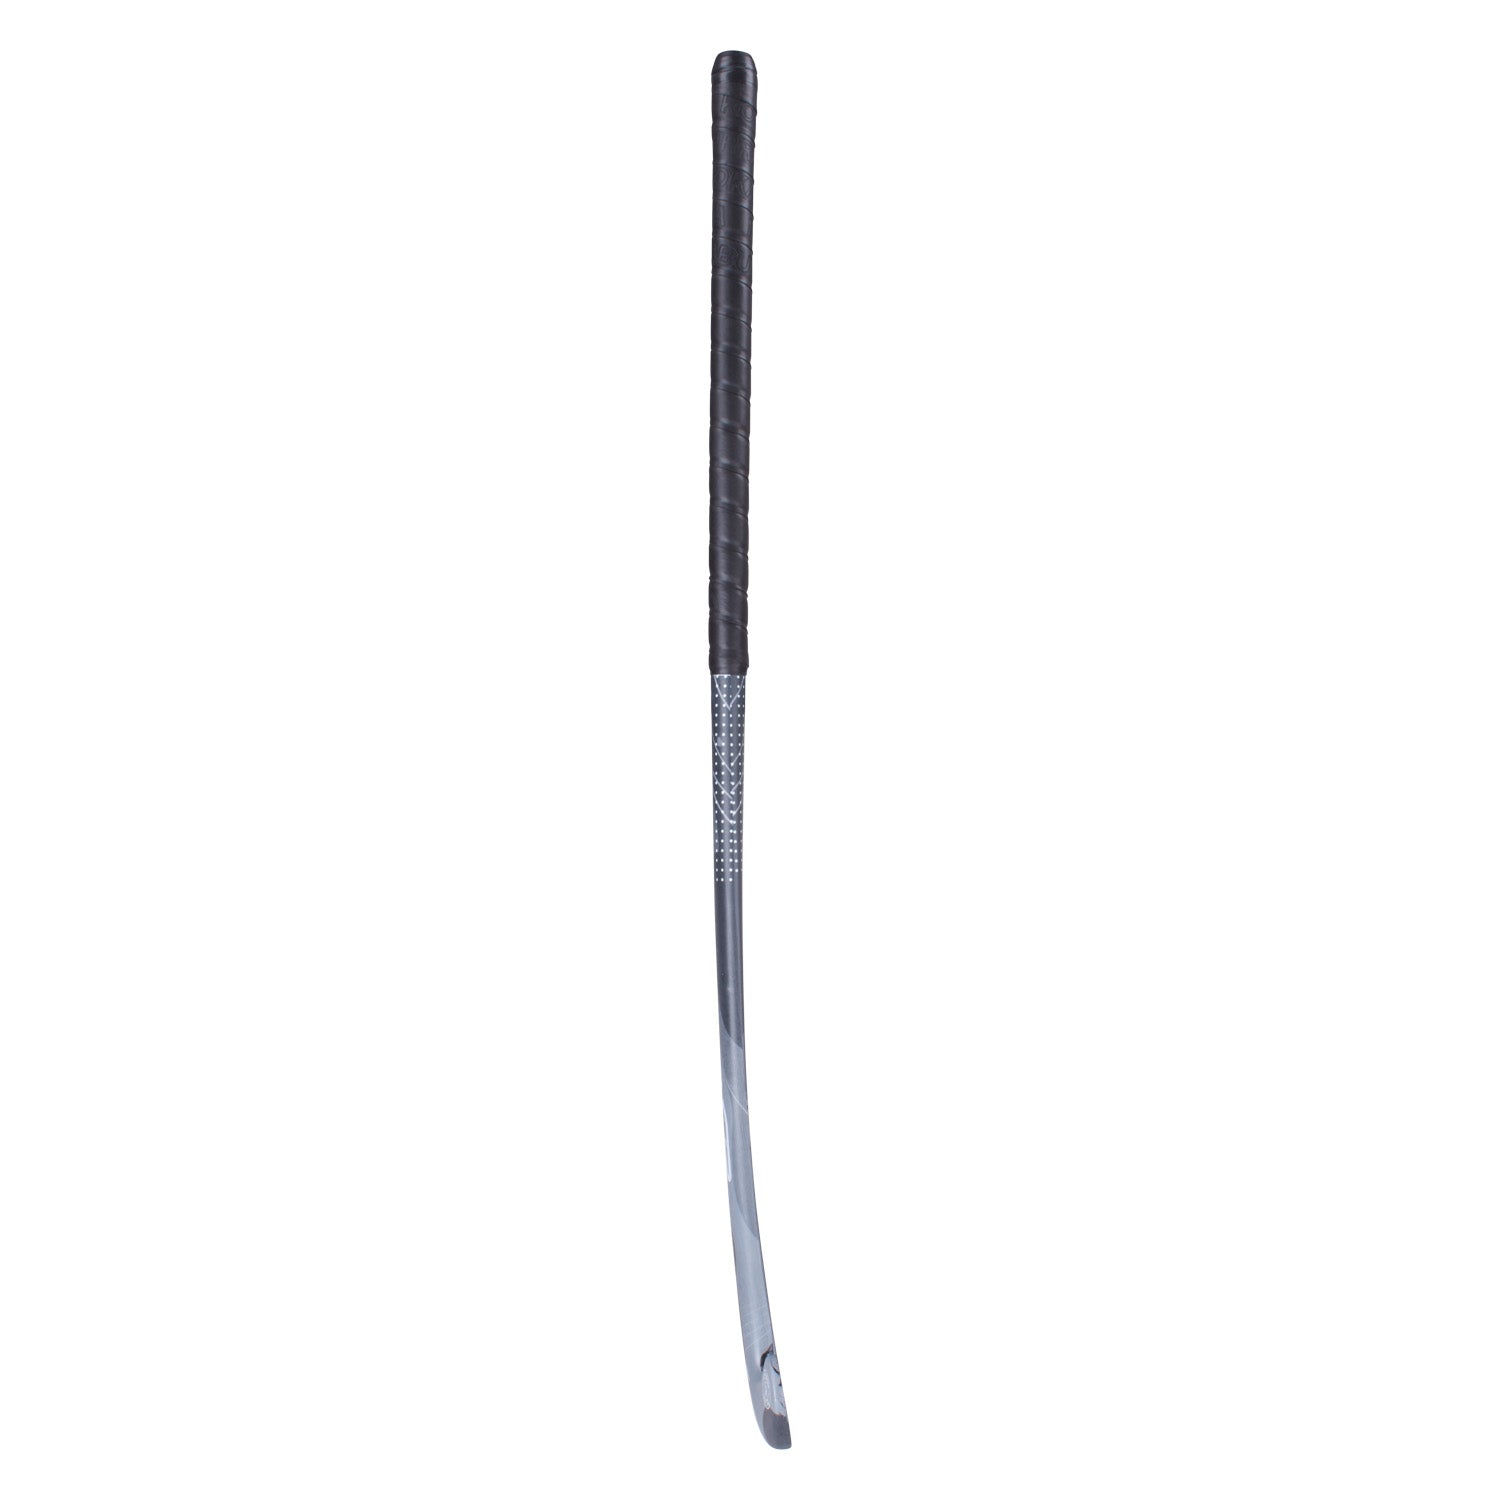 Kookaburra Cozmos M-Bow 35 Light Hockey Stick